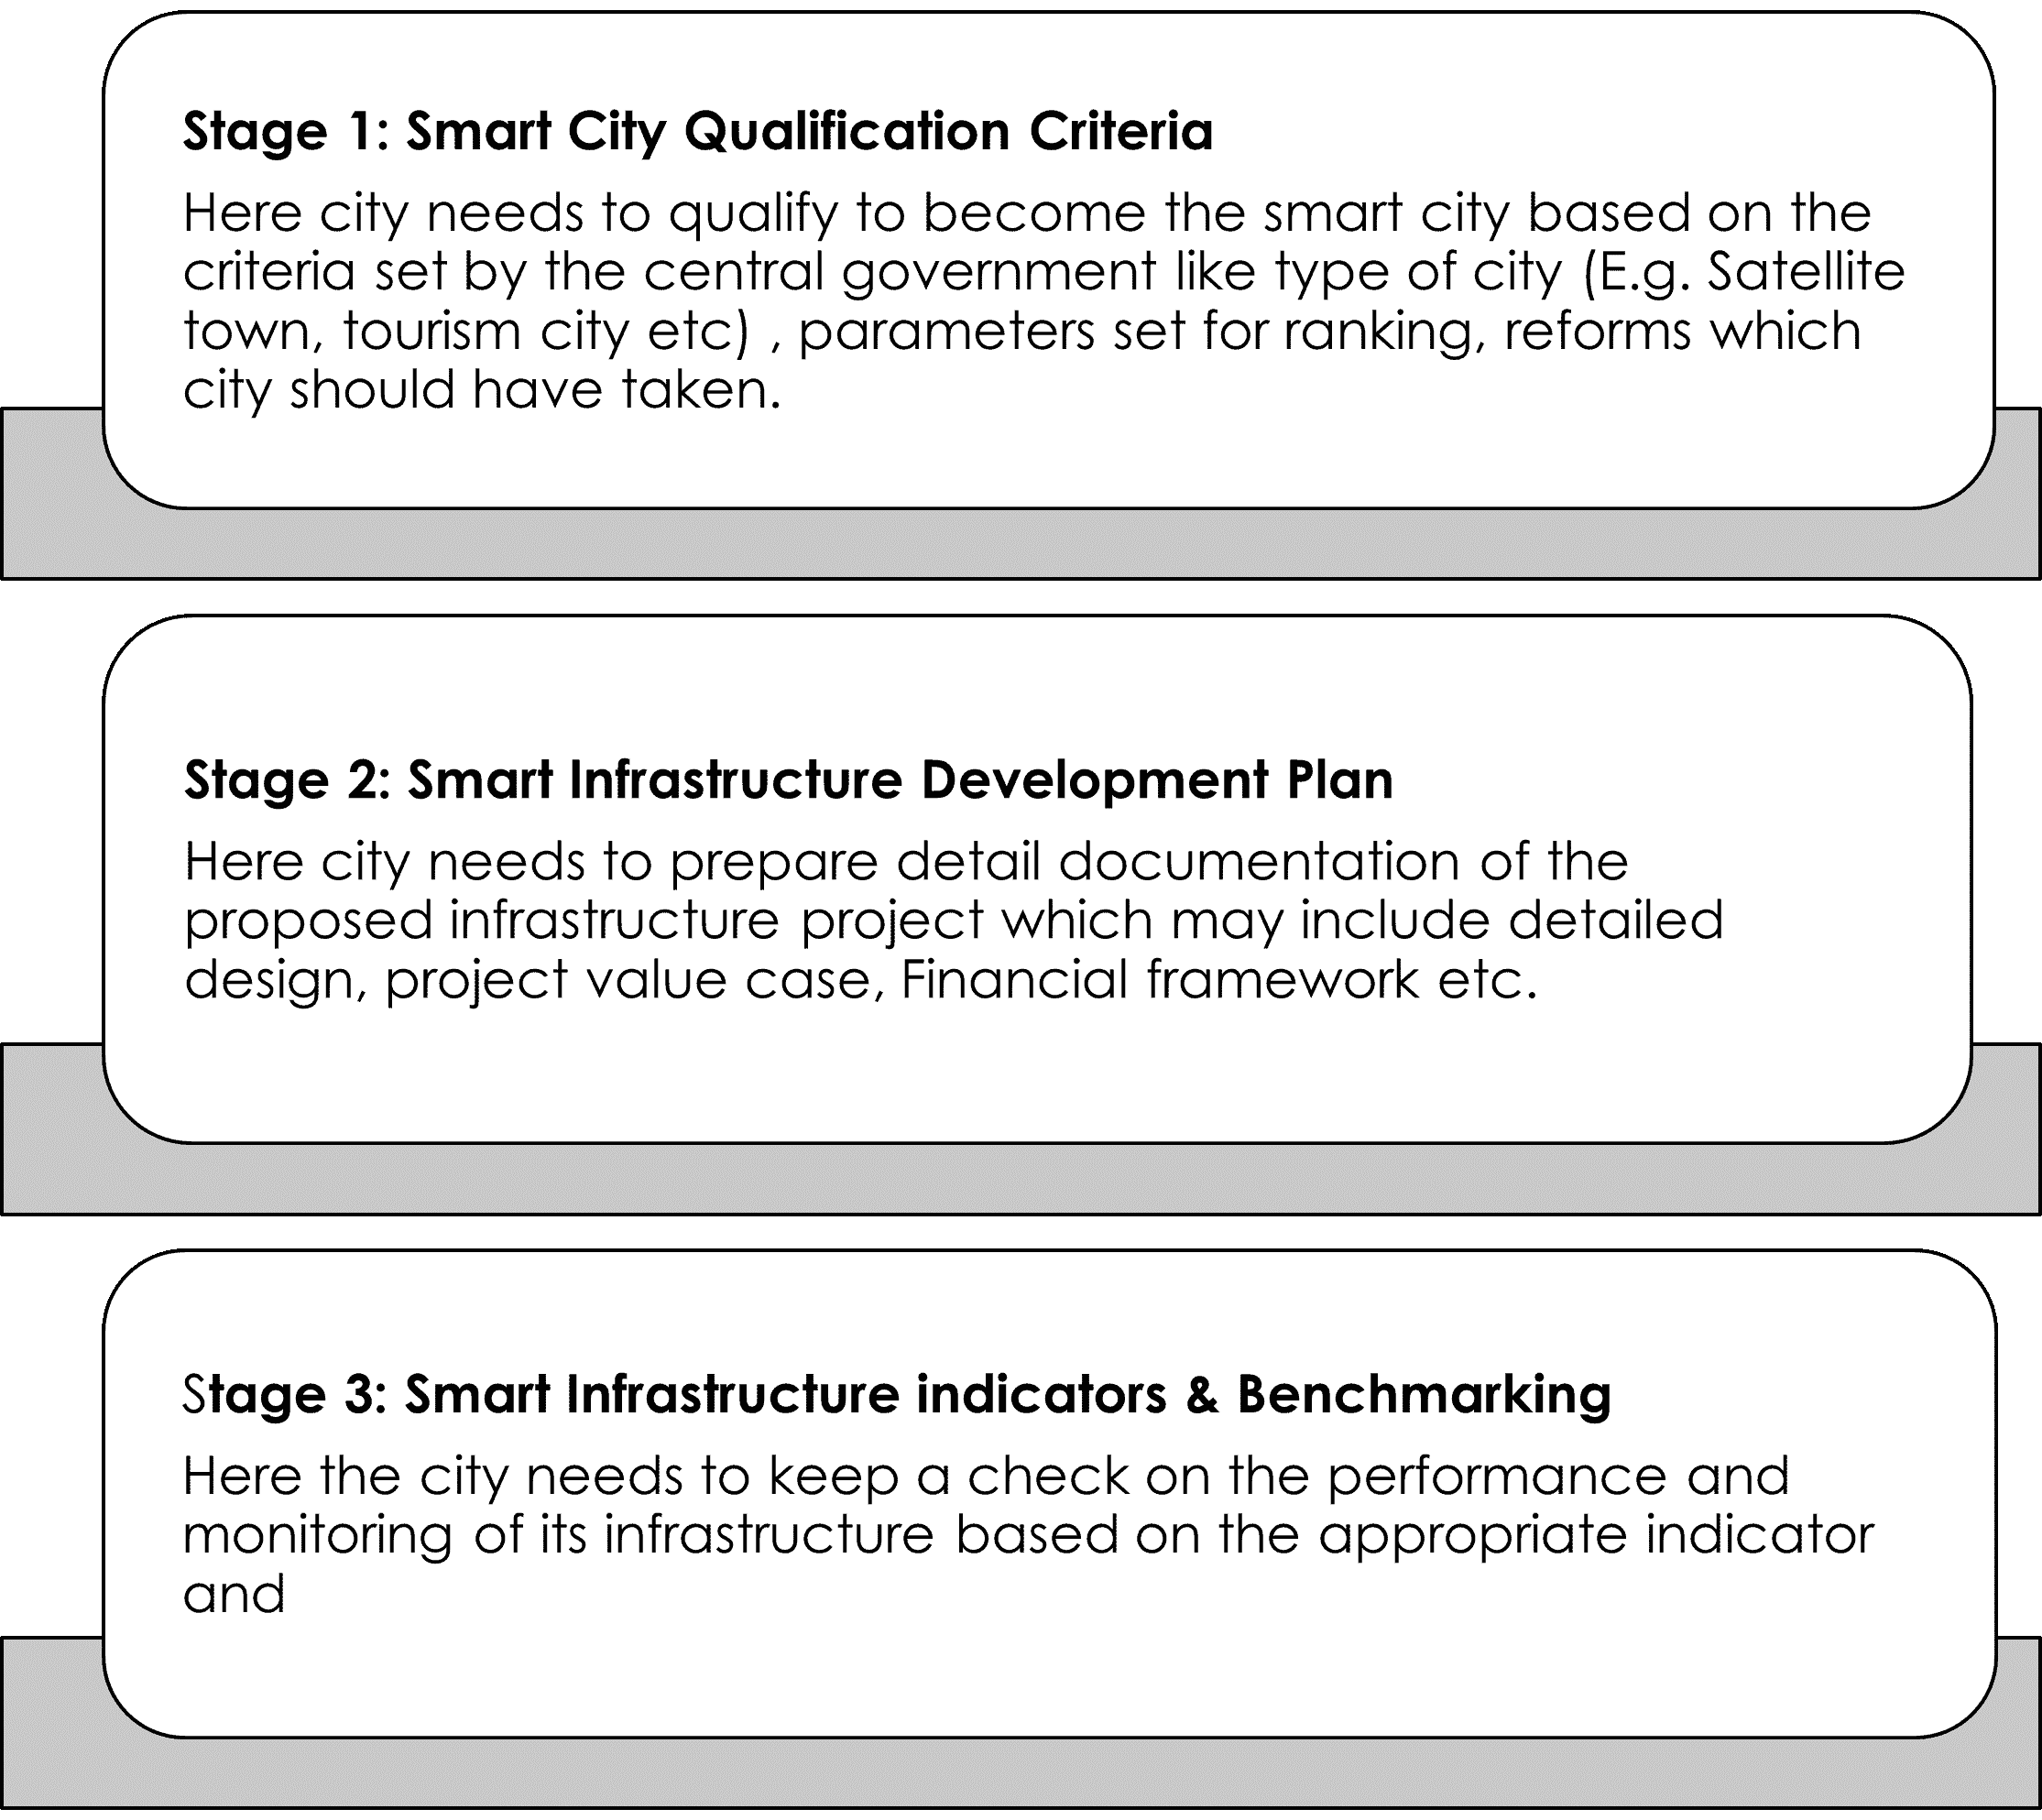 Three stage process